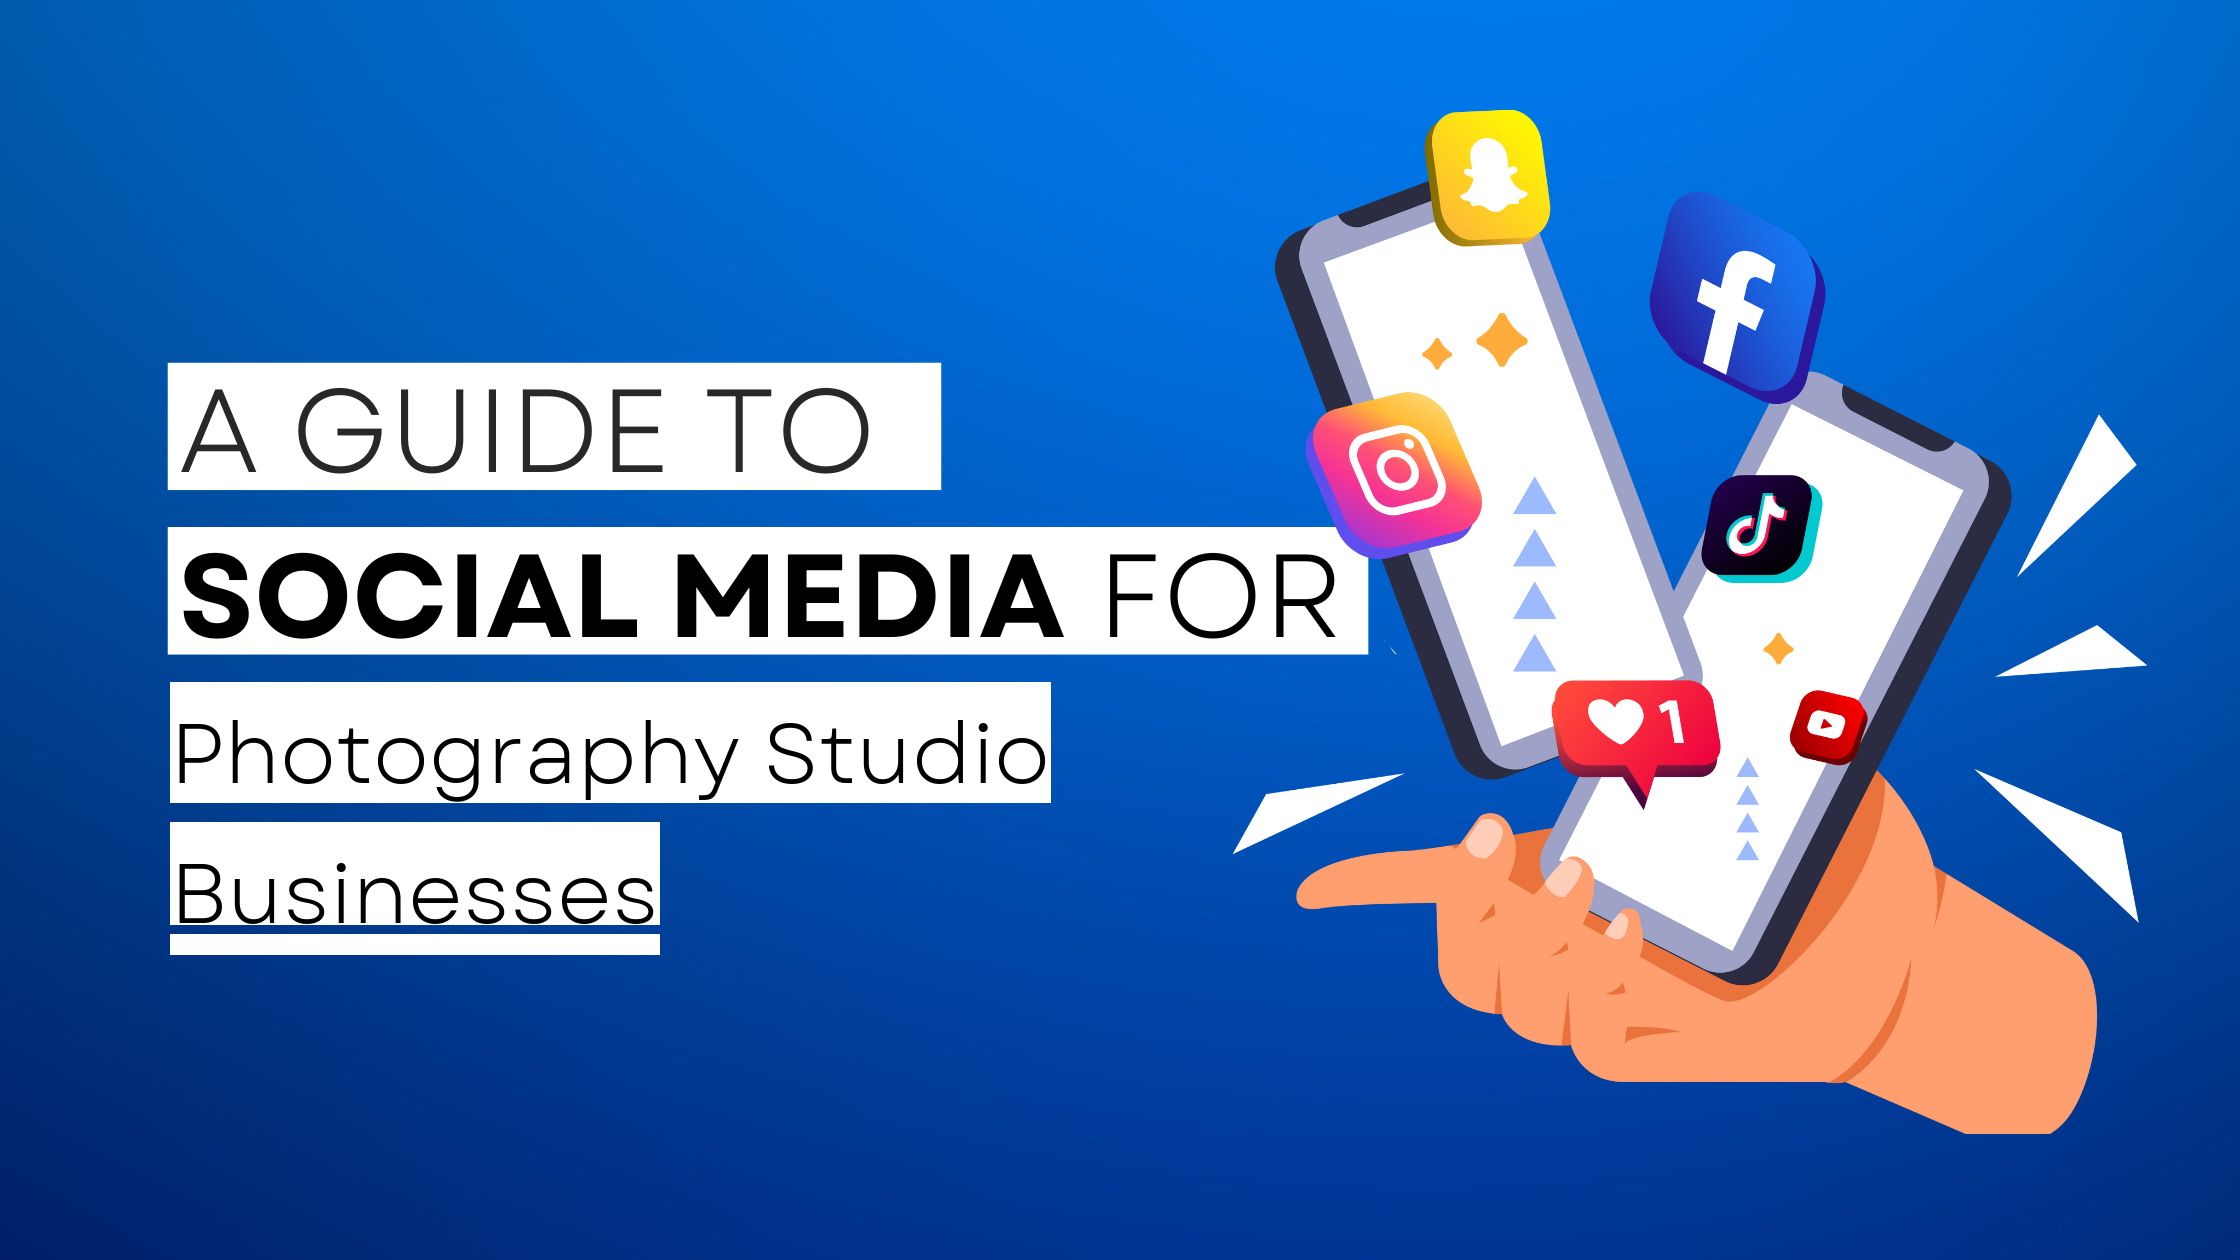 How to start Photography Studio on social media